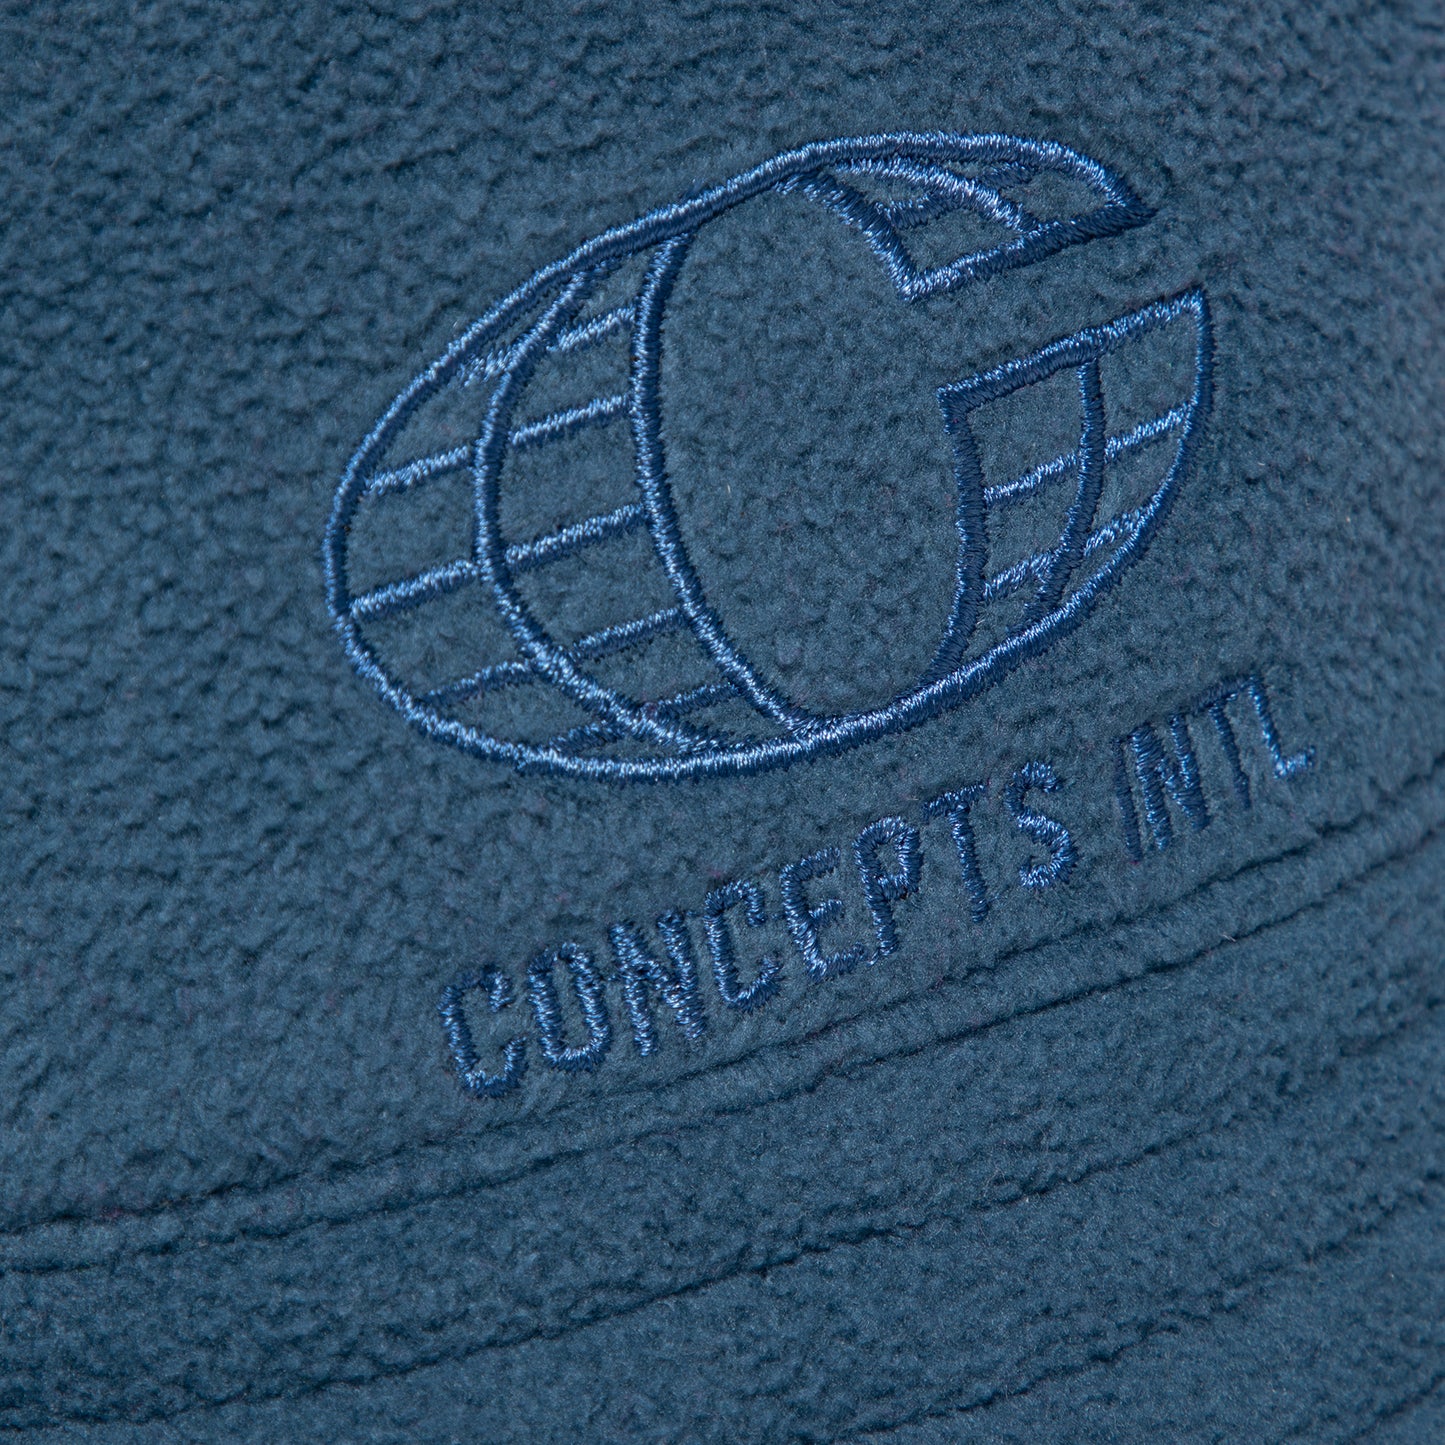 Concepts INTL Polar Fleece Bucket Hat (Navy)